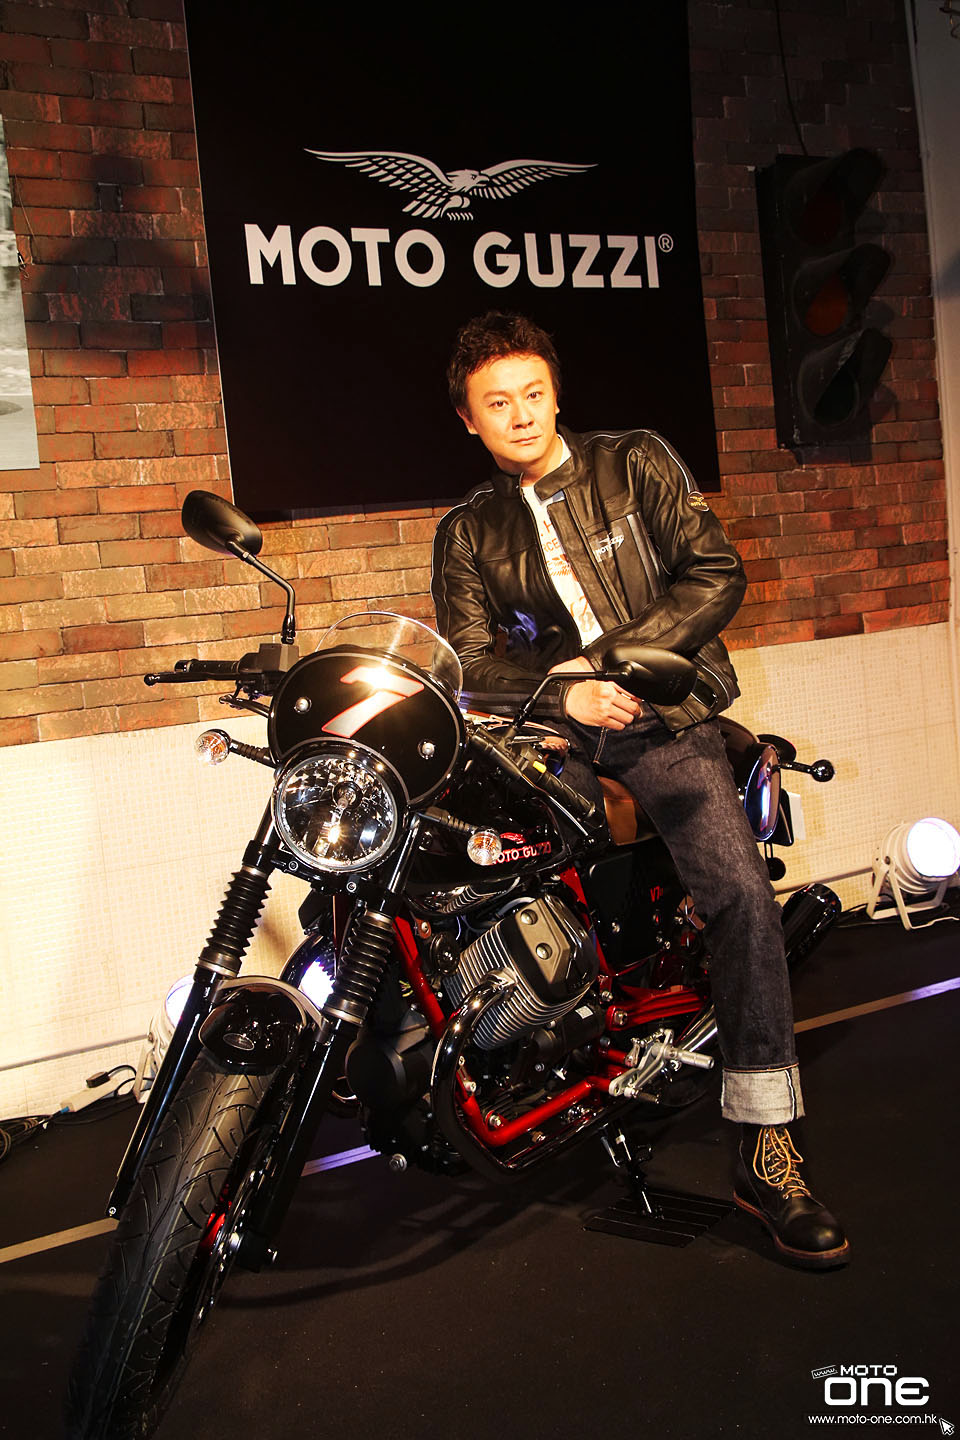 2015 Moto Guzzi launch party